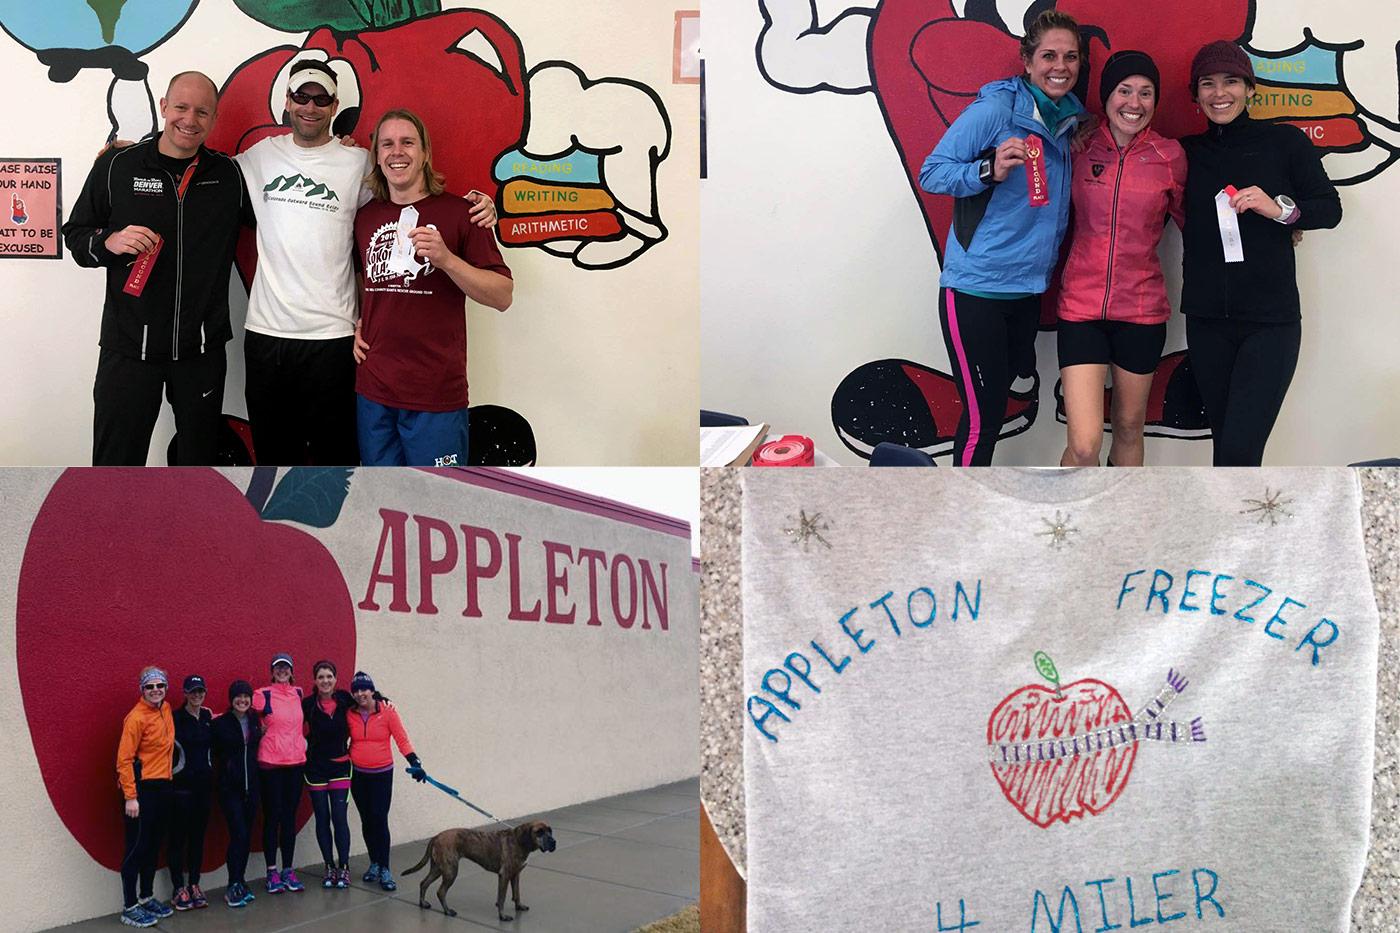 Appleton Freezer 4-mile race